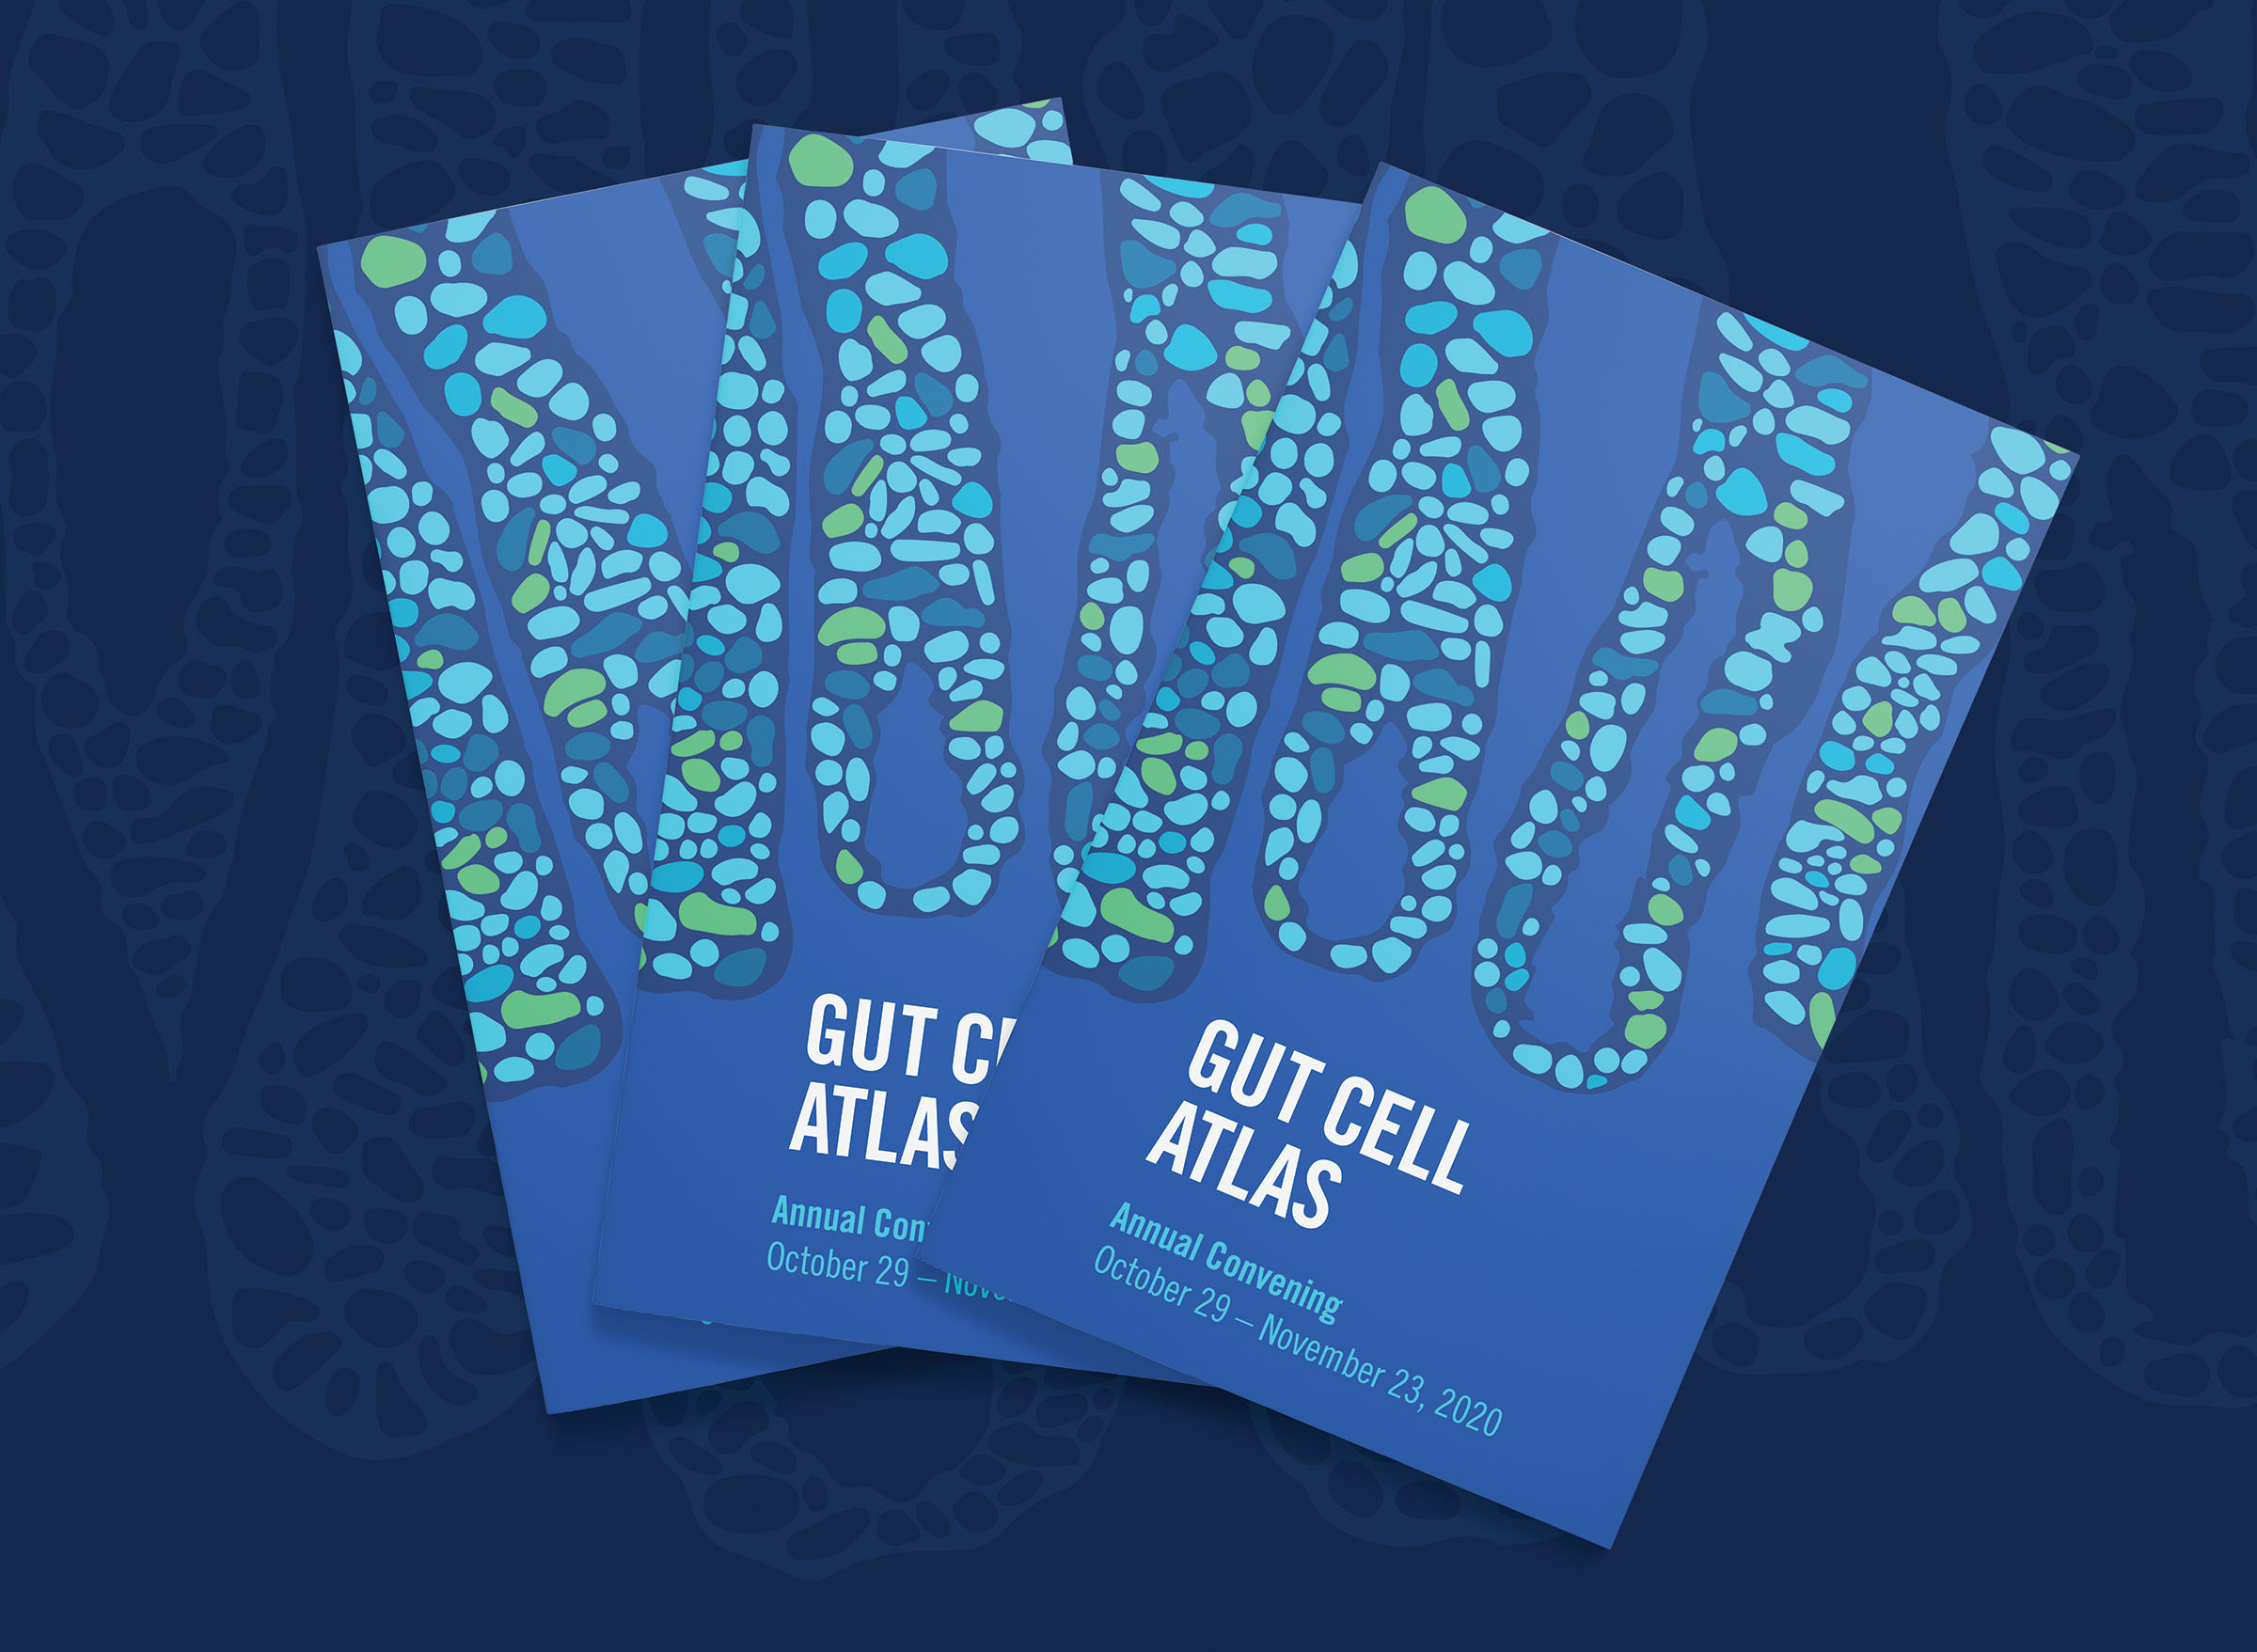 Helmsley_Gut Cell Atlas_Booklet 1